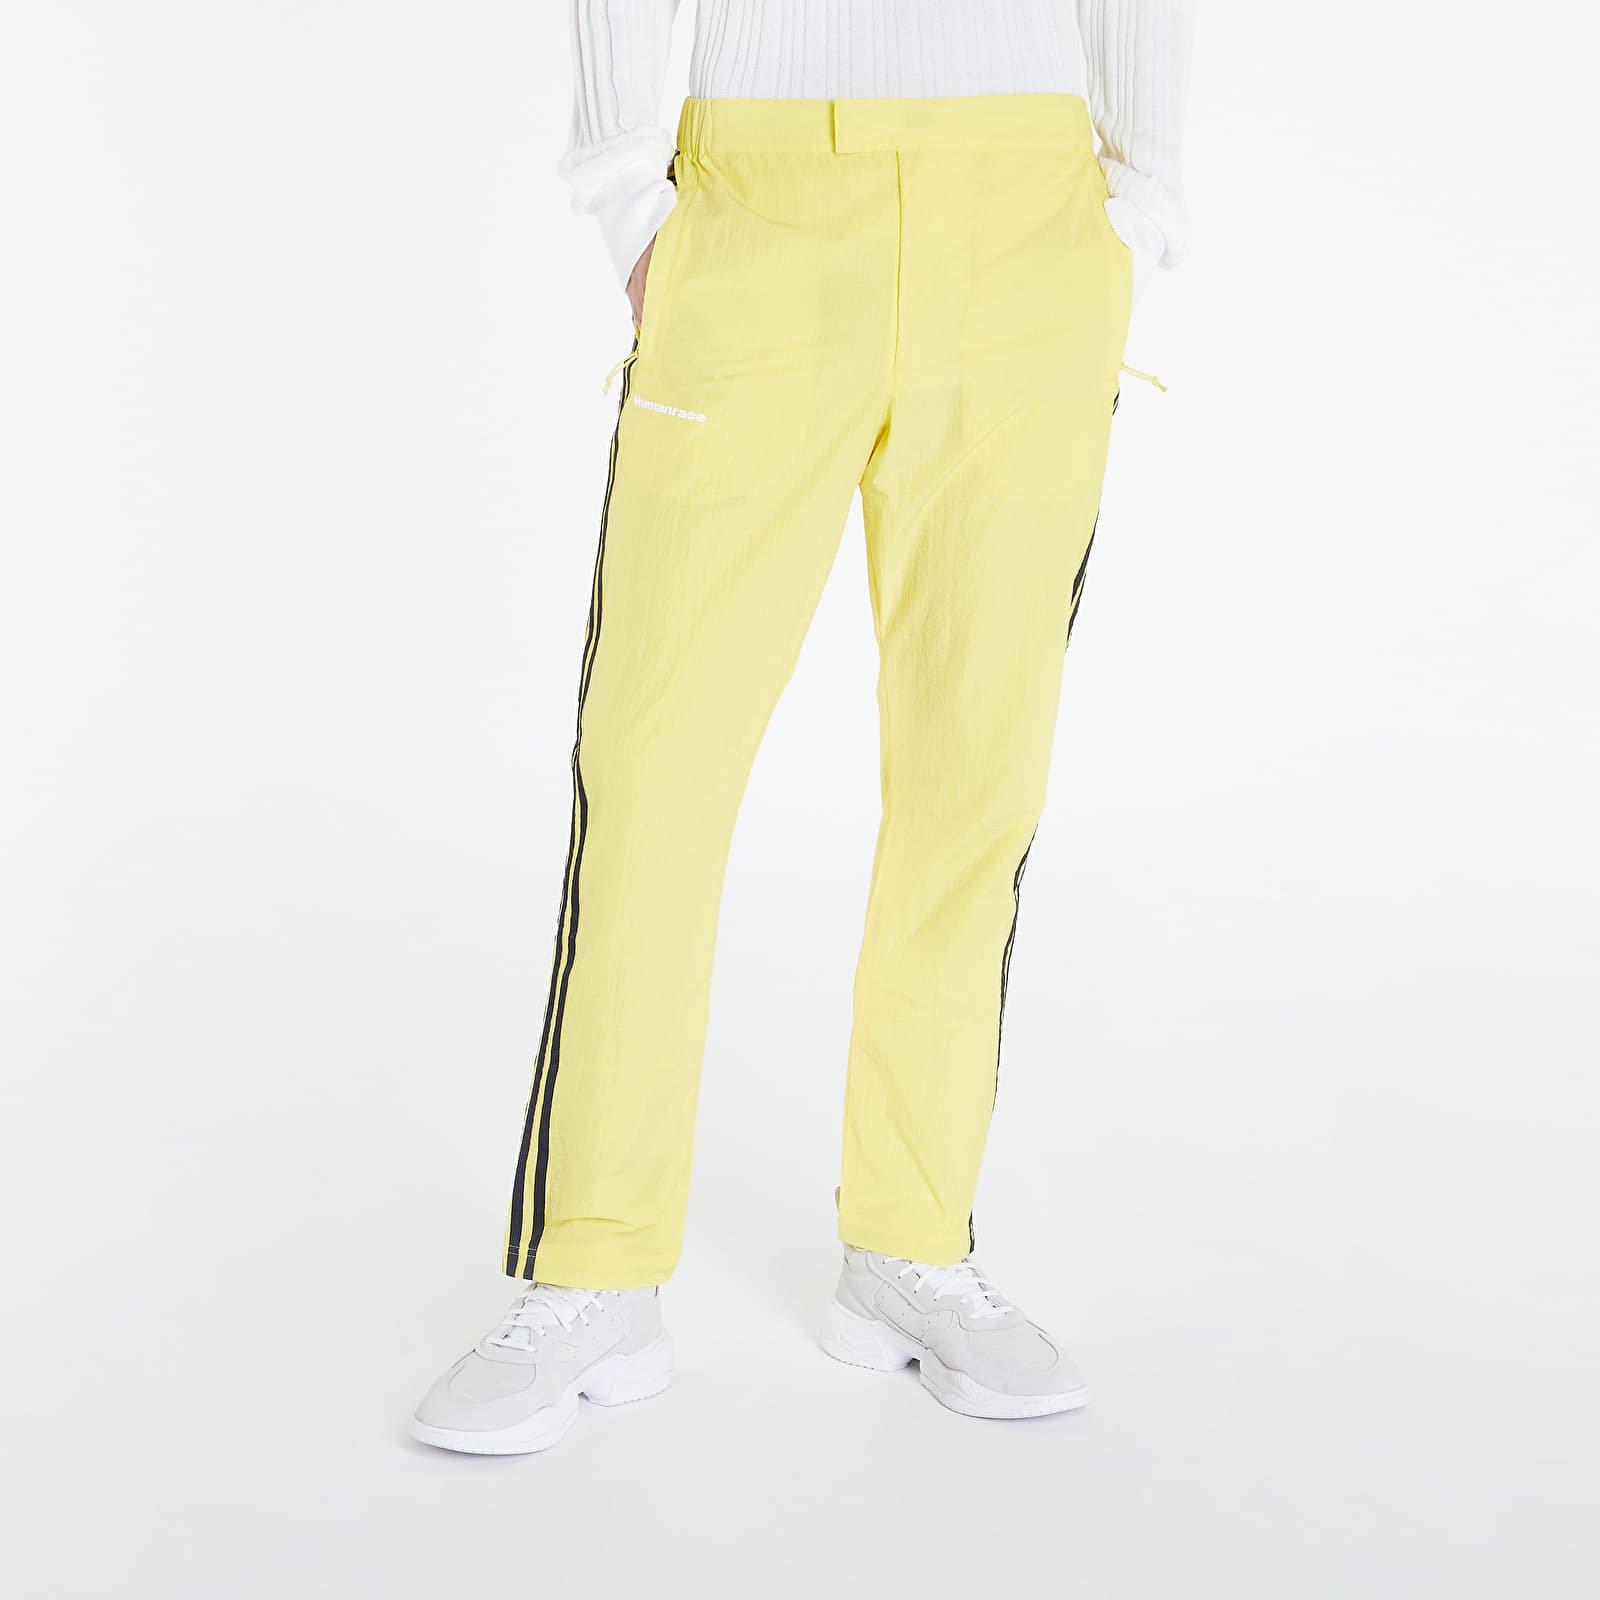 Adidas x Pharrell Williams Shell Pants UNISEX Light Yellow adidas Originals  | Lyst